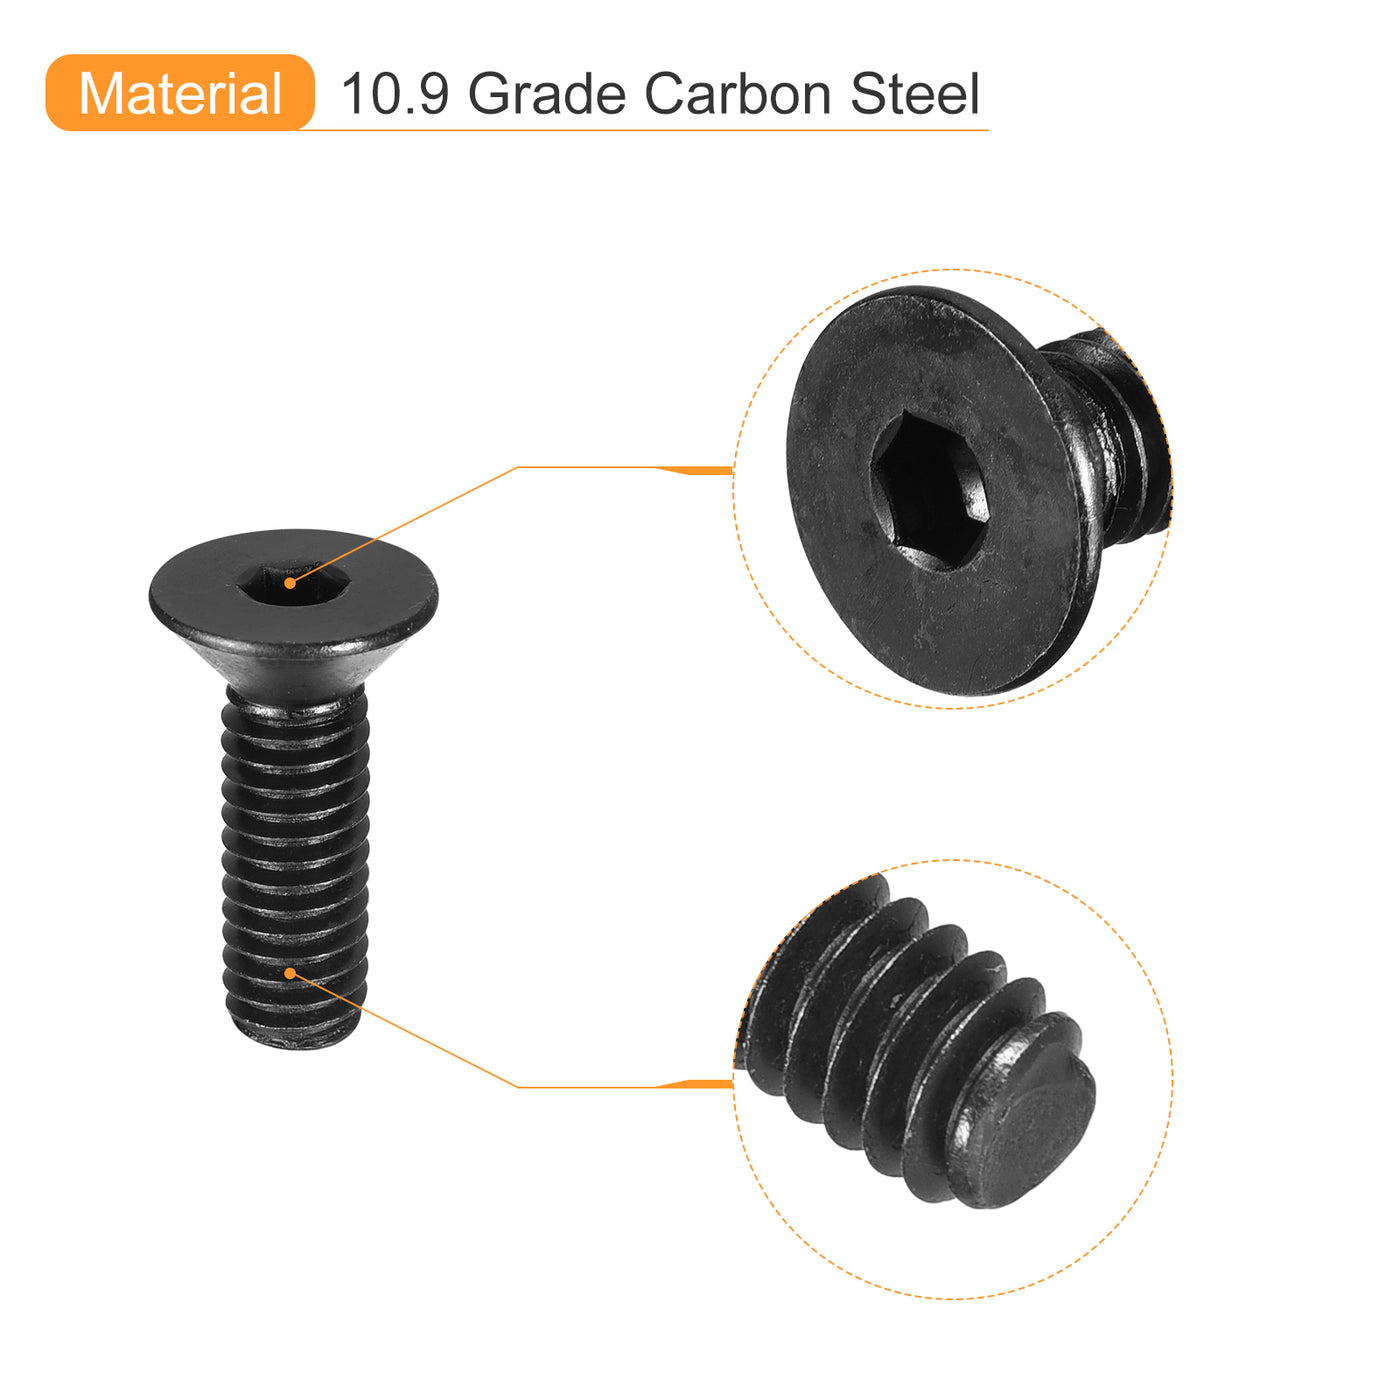 uxcell Uxcell 5/16-18x1" Flat Head Socket Cap Screws, 10.9 Grade Carbon Steel, 25PCS